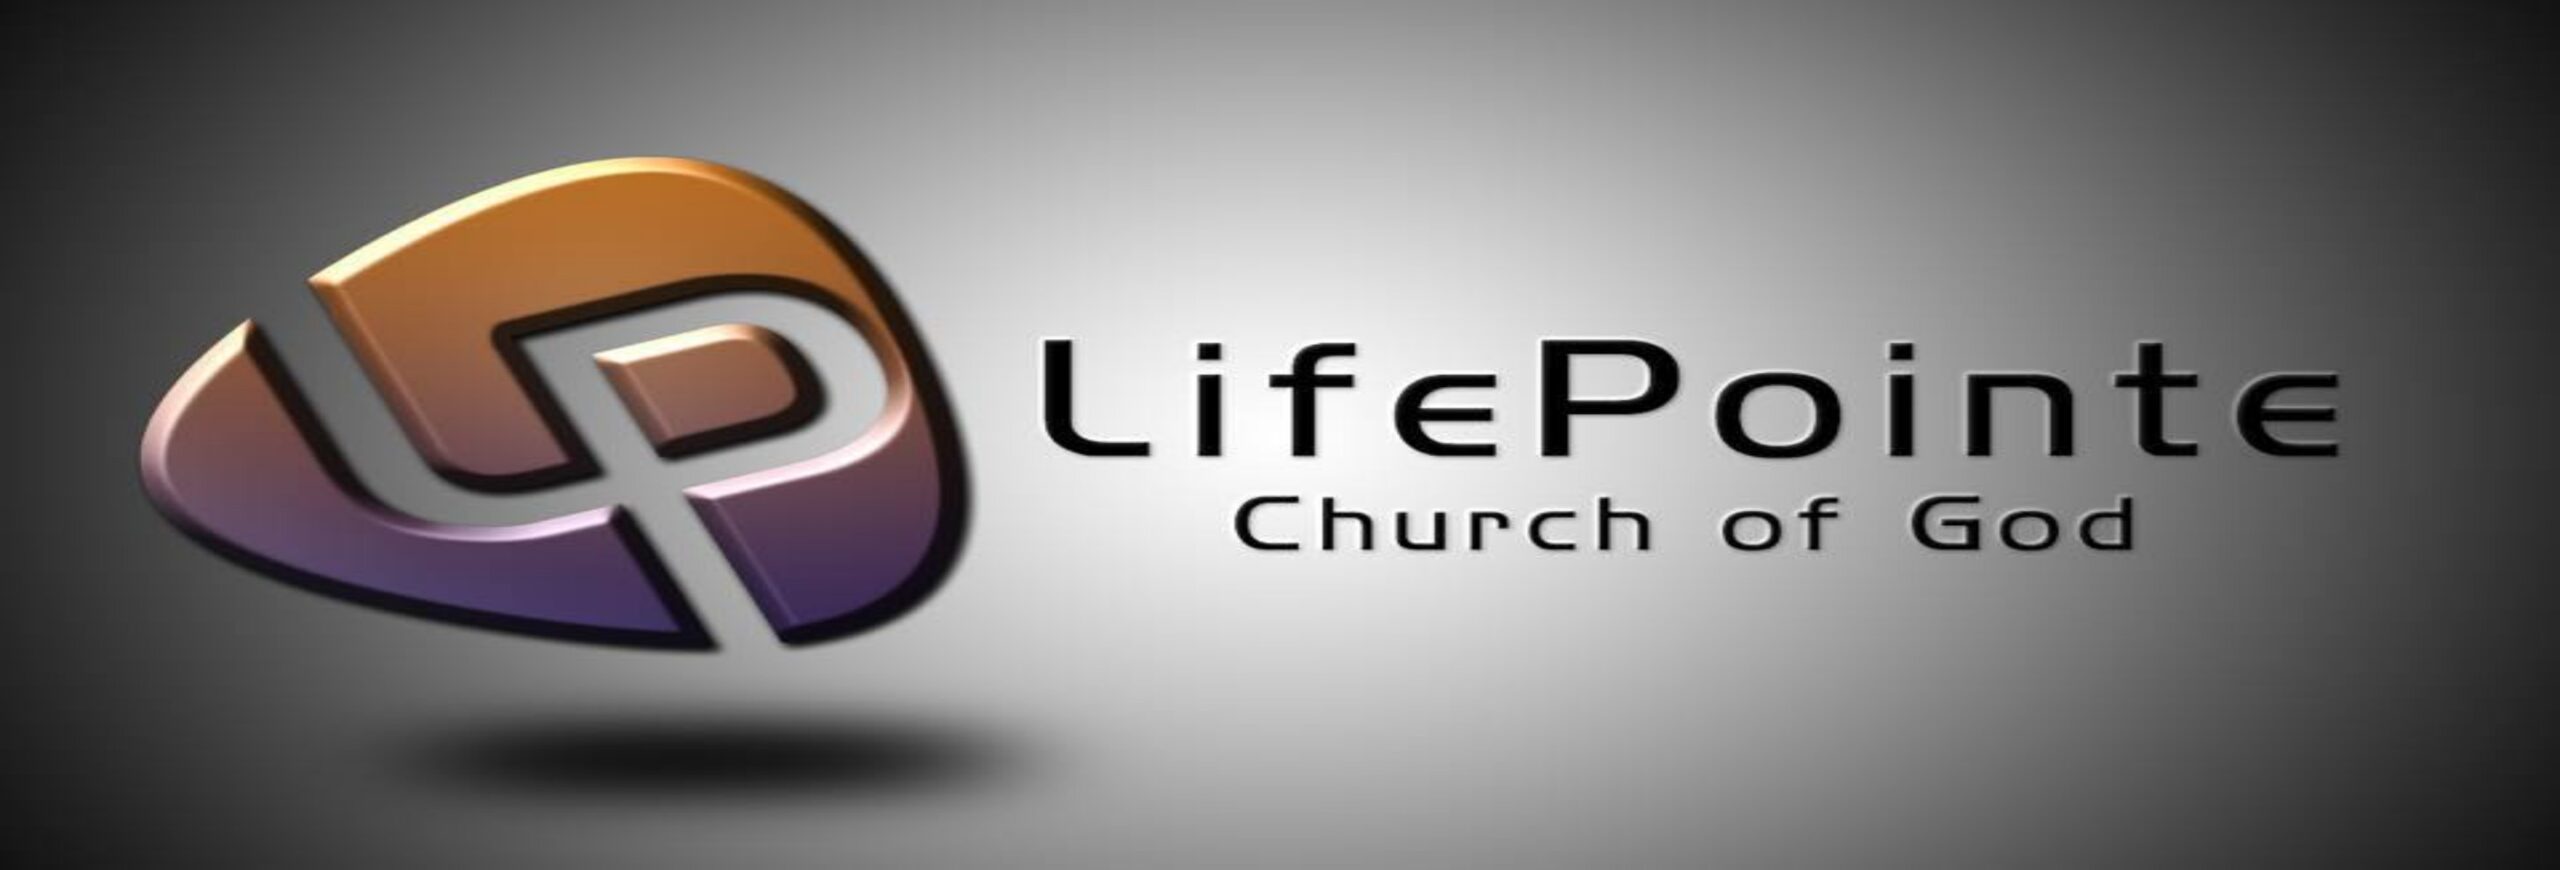 LifePointe Church of God